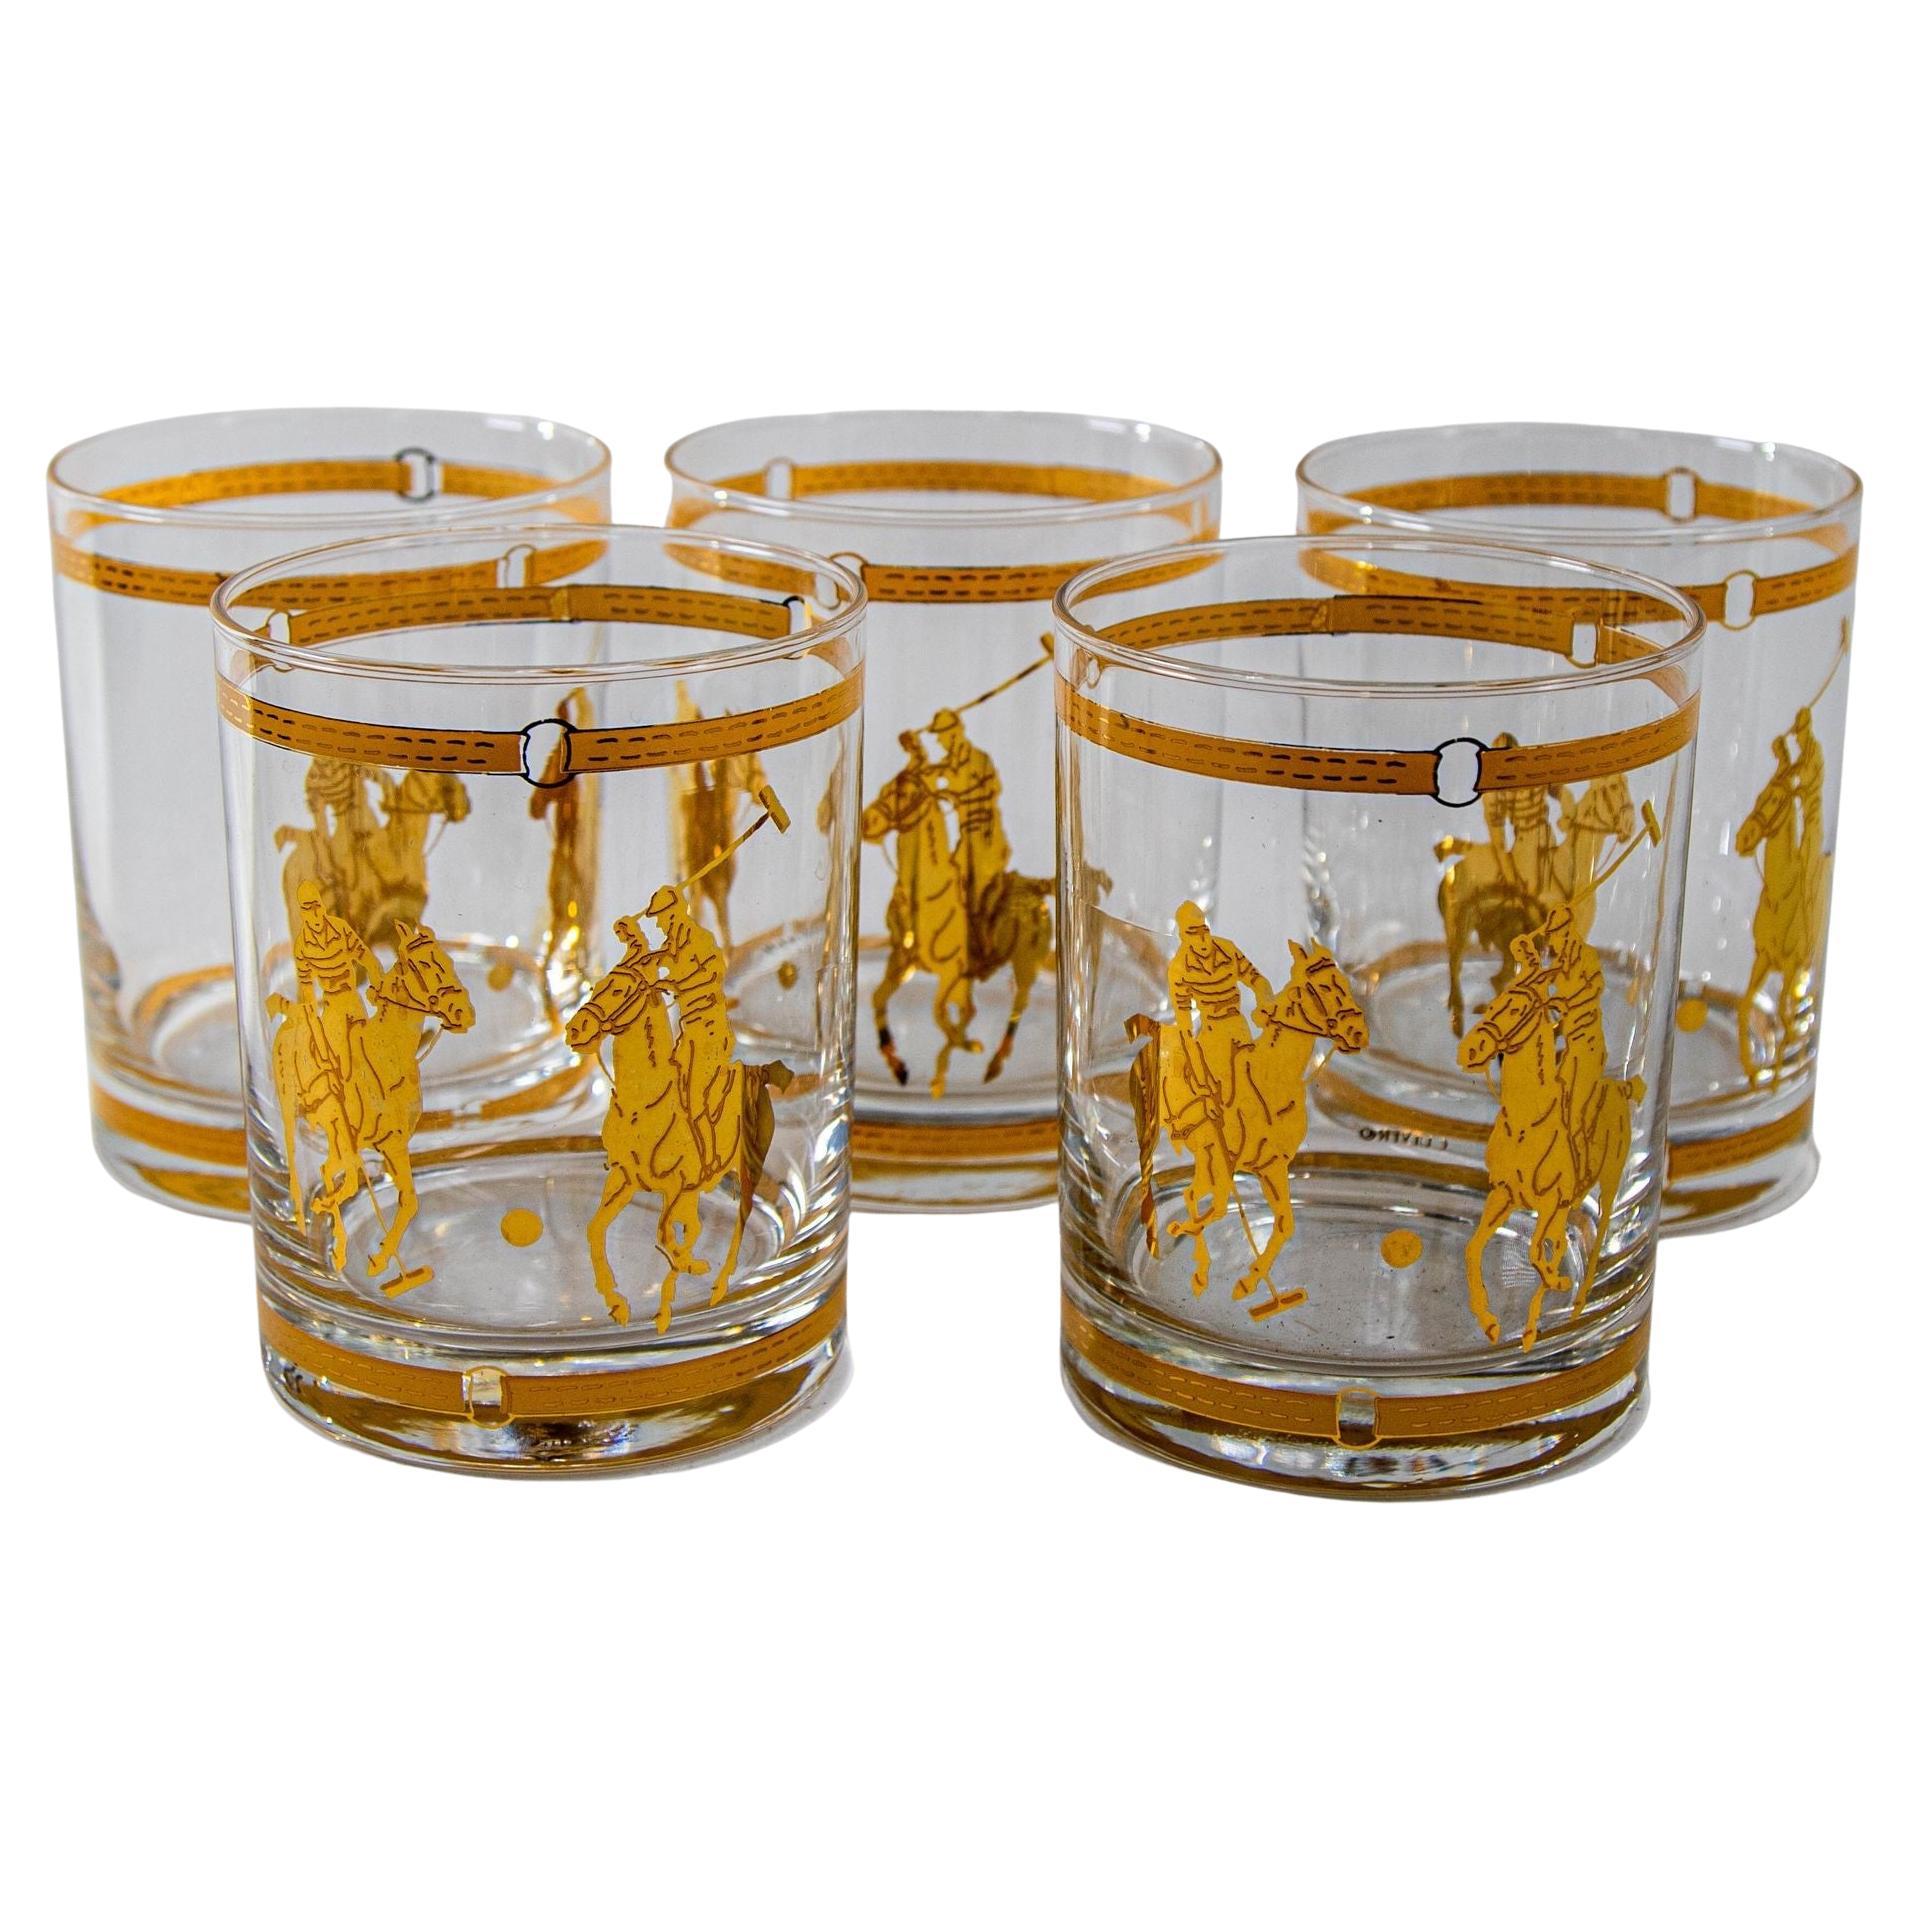 Set of Five Equestrian Polo on The Rocks Glasses Barware Culver 22 Karat Gold